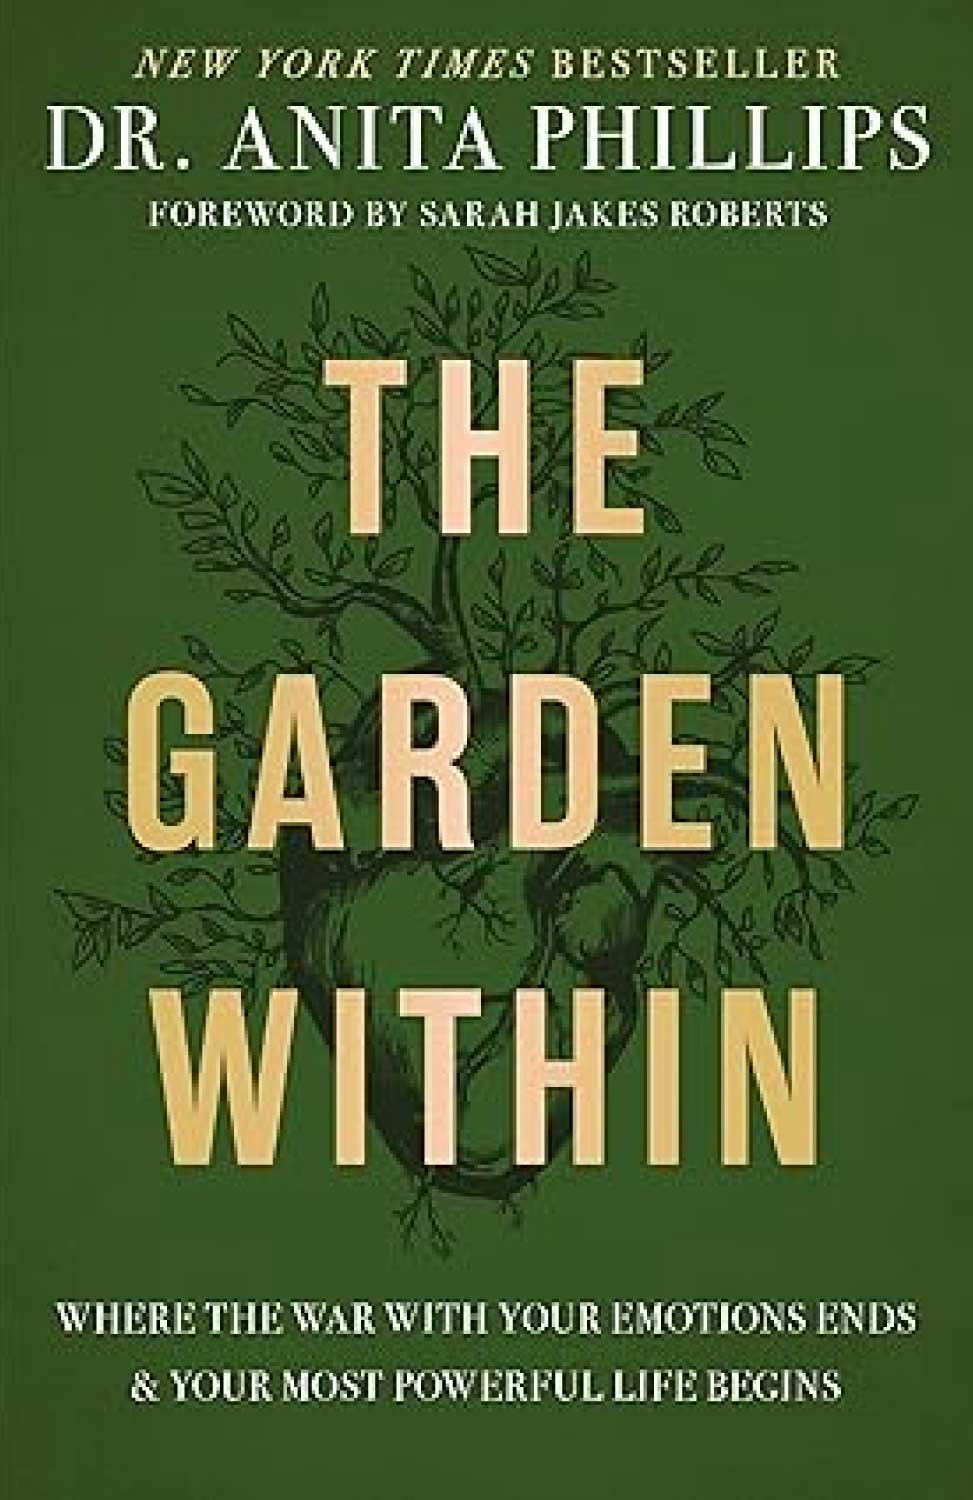 The Garden Within